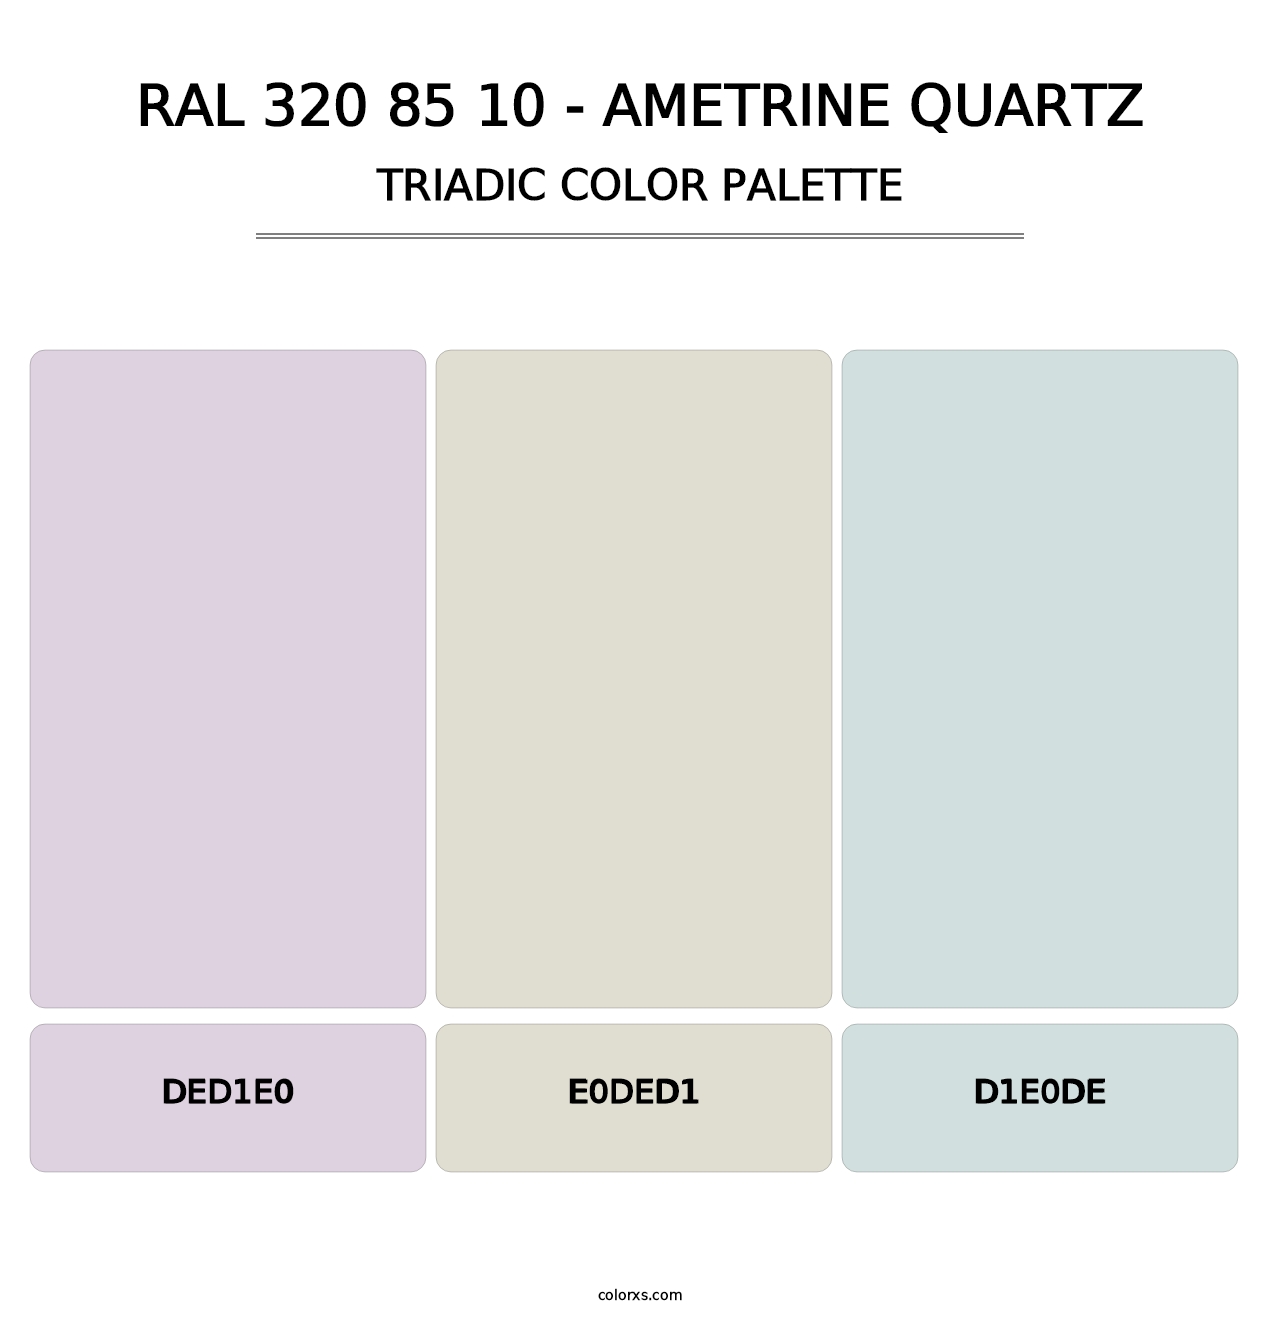 RAL 320 85 10 - Ametrine Quartz - Triadic Color Palette